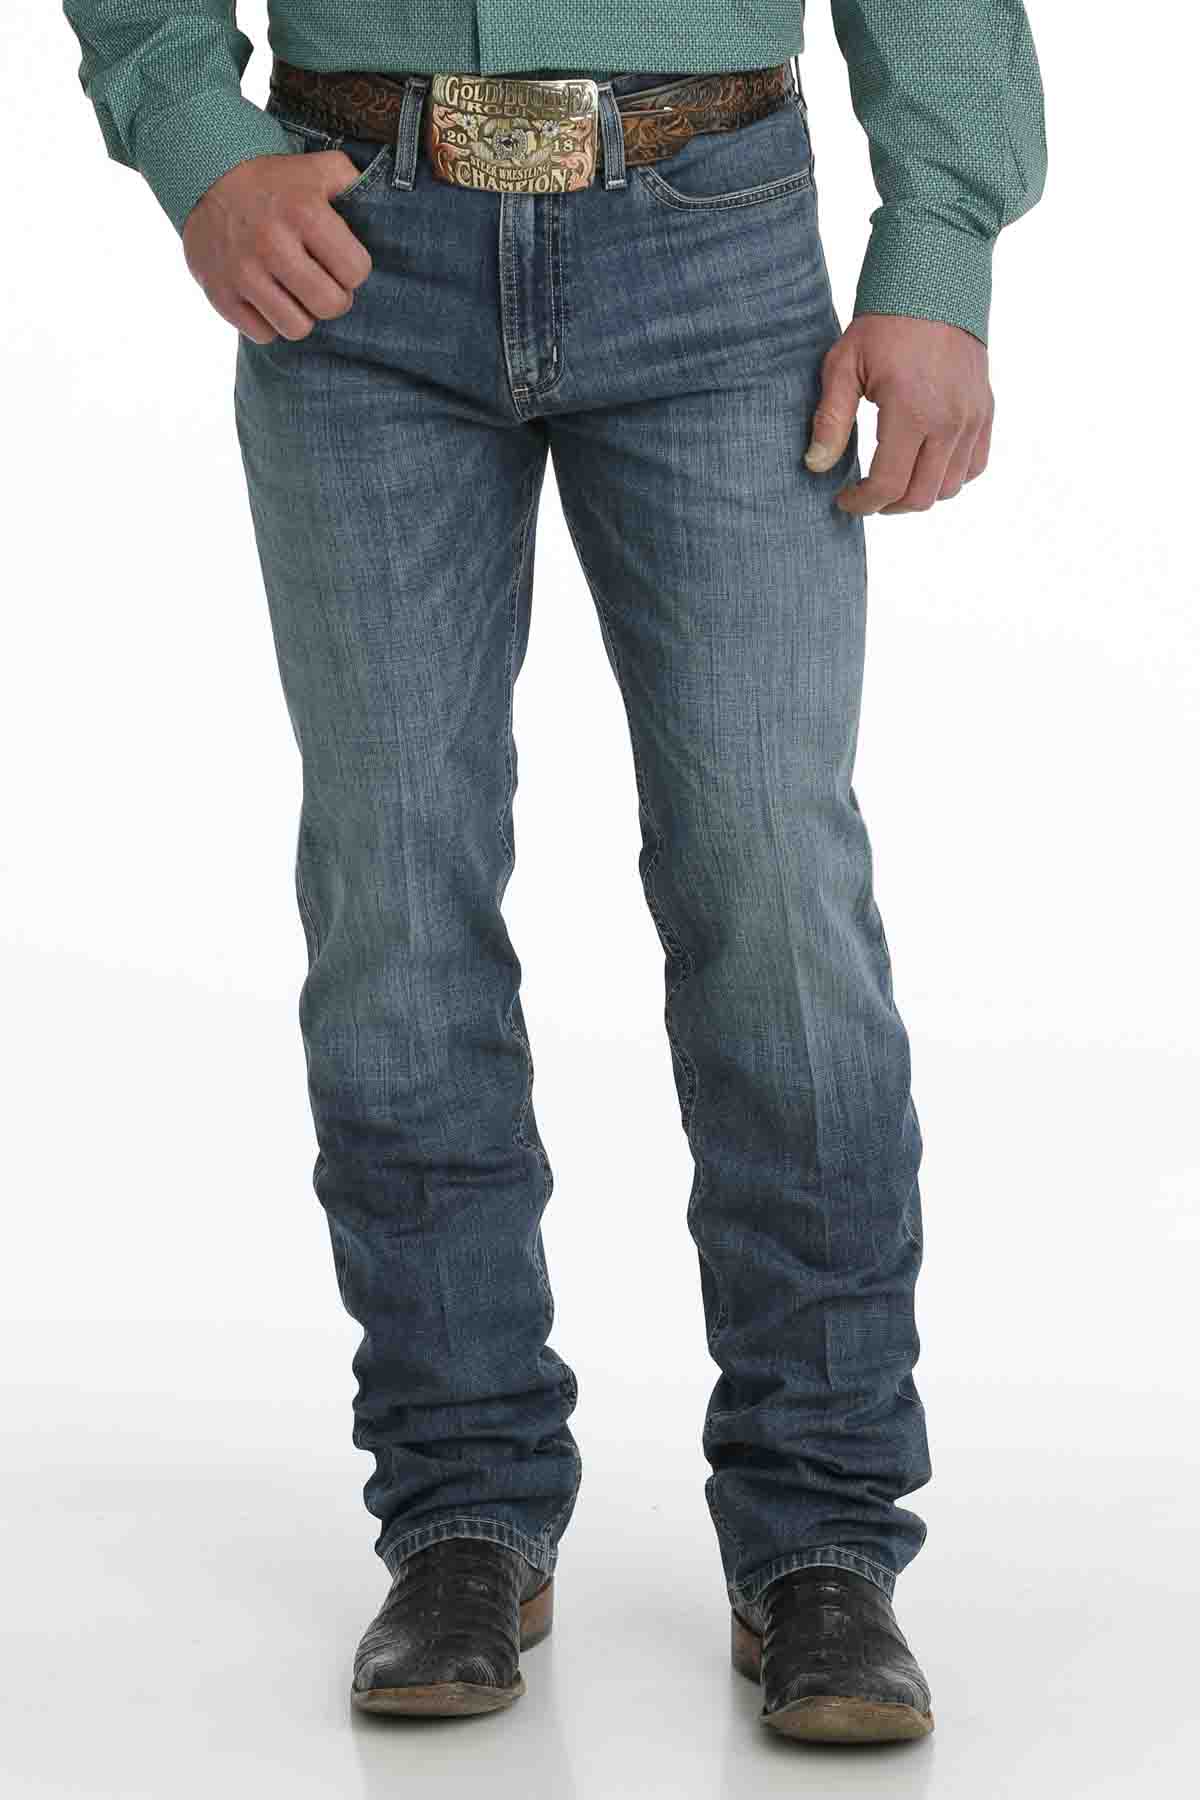 Men's Silver Label Jeans in Medium Stone by Cinch